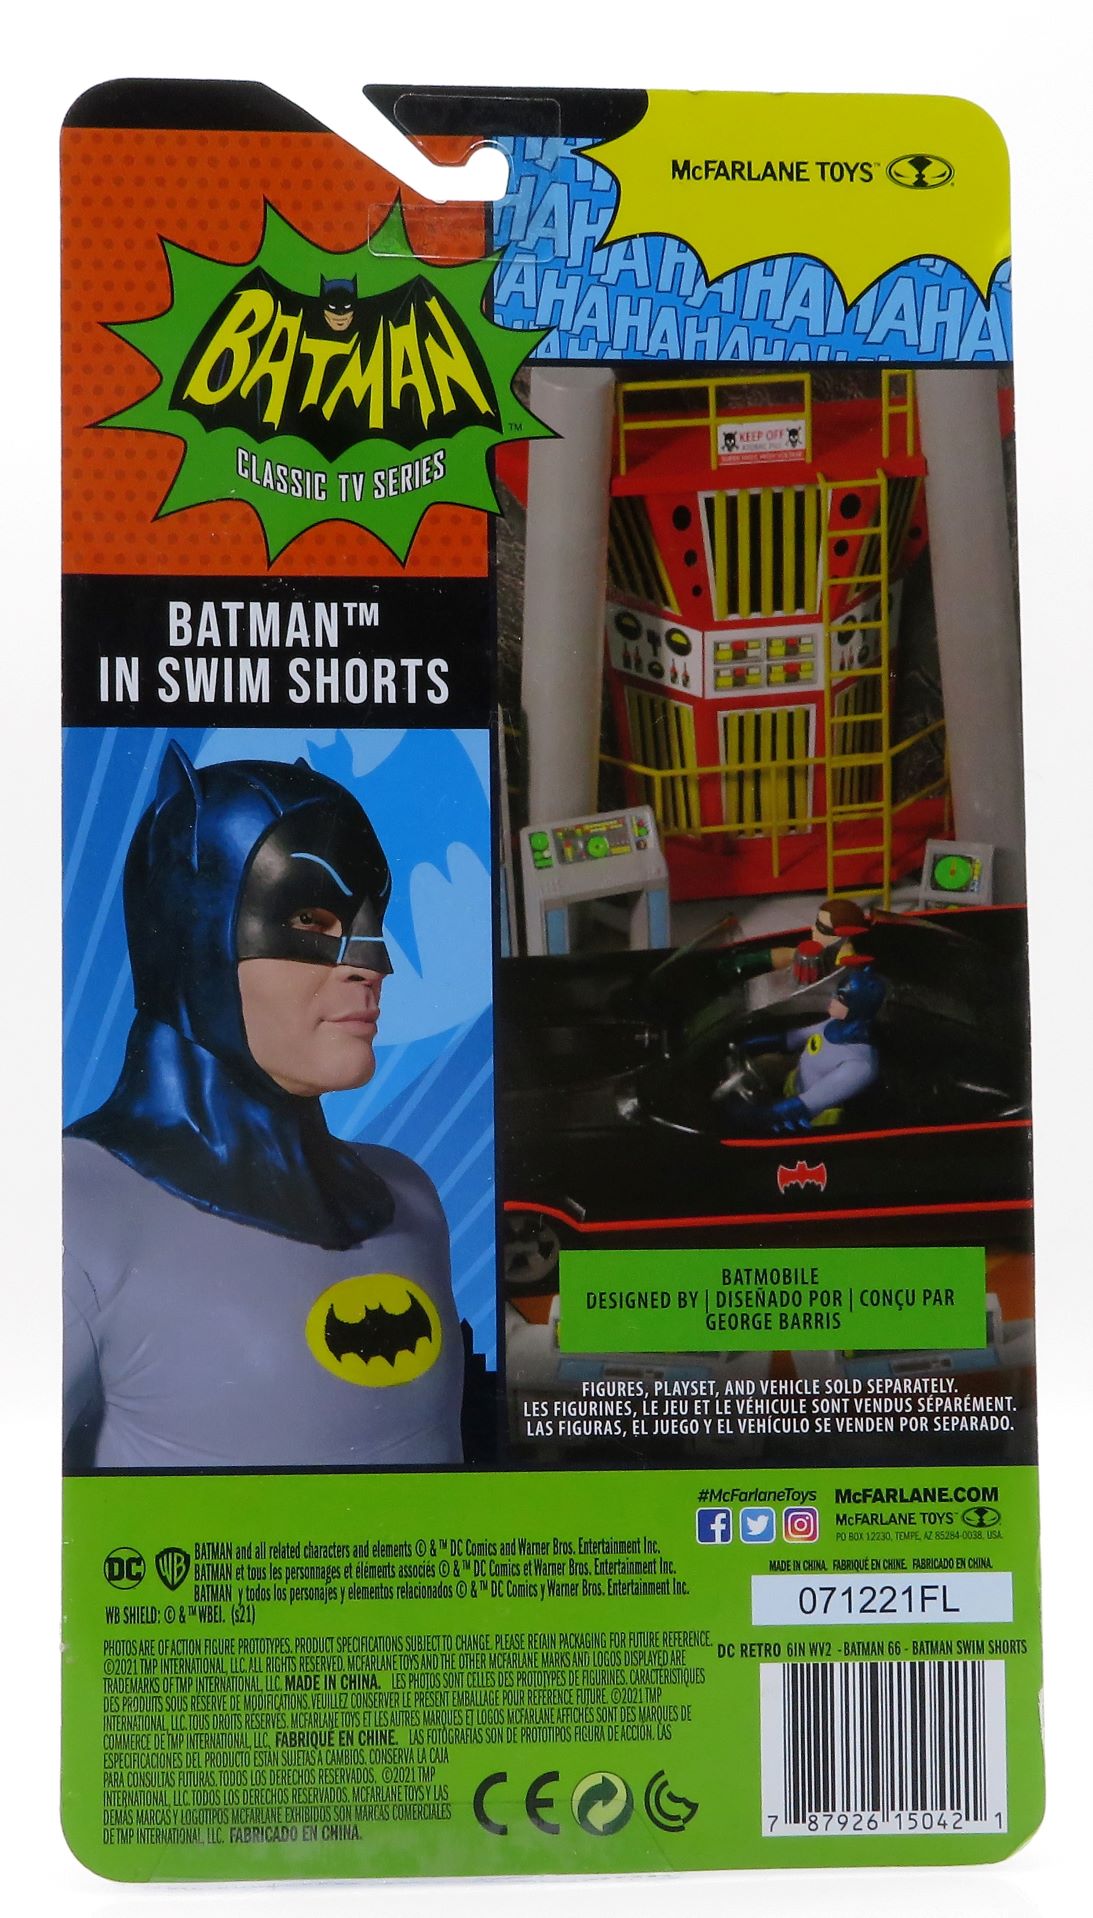 mcfarlane-toys-batman-classic-tv-series-batman-in-swim-shorts-02.jpg